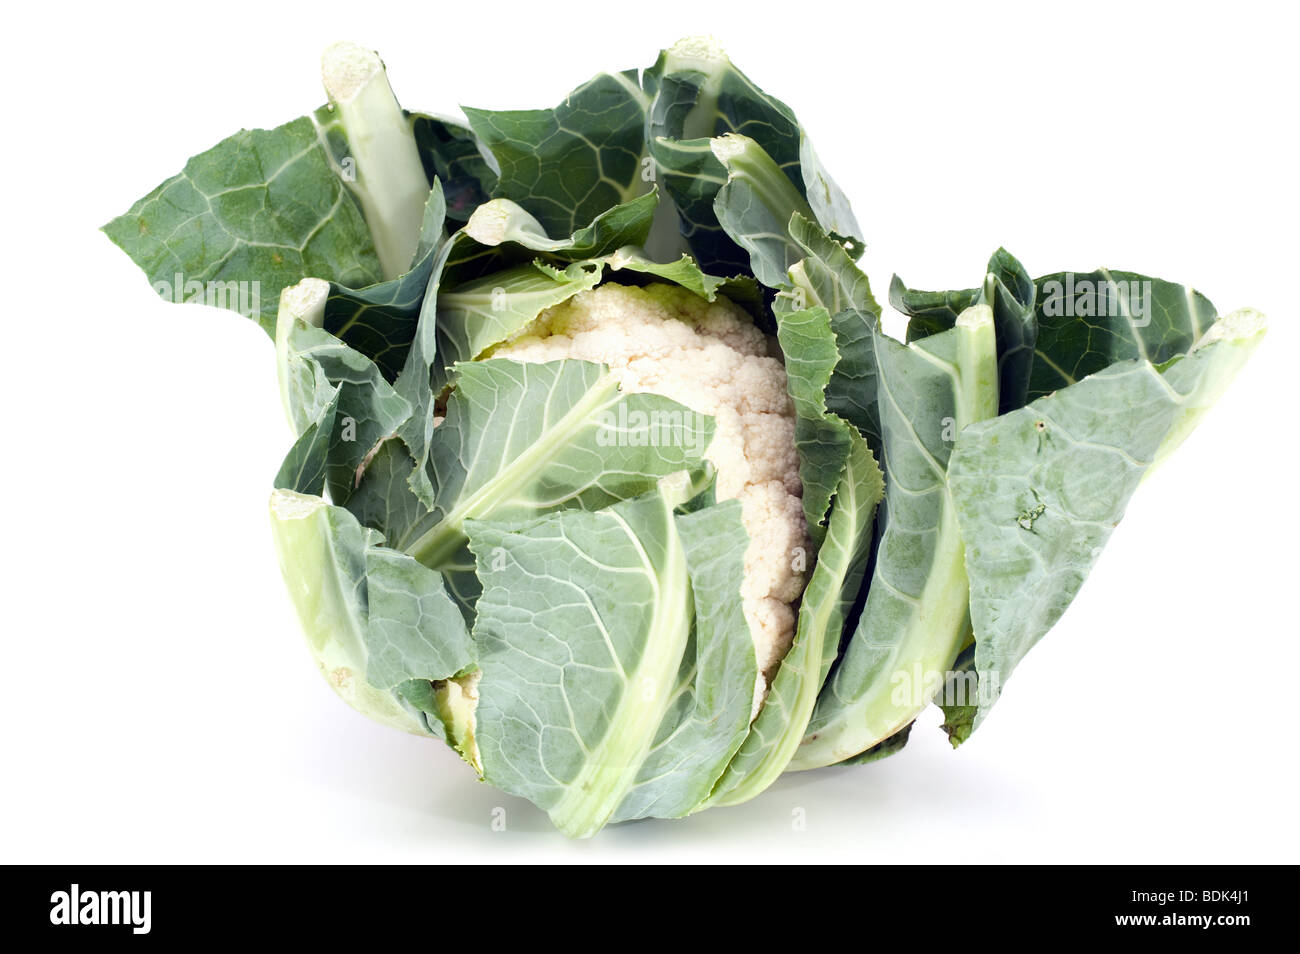 A single cauliflower 'Brassica oleracea' Stock Photo